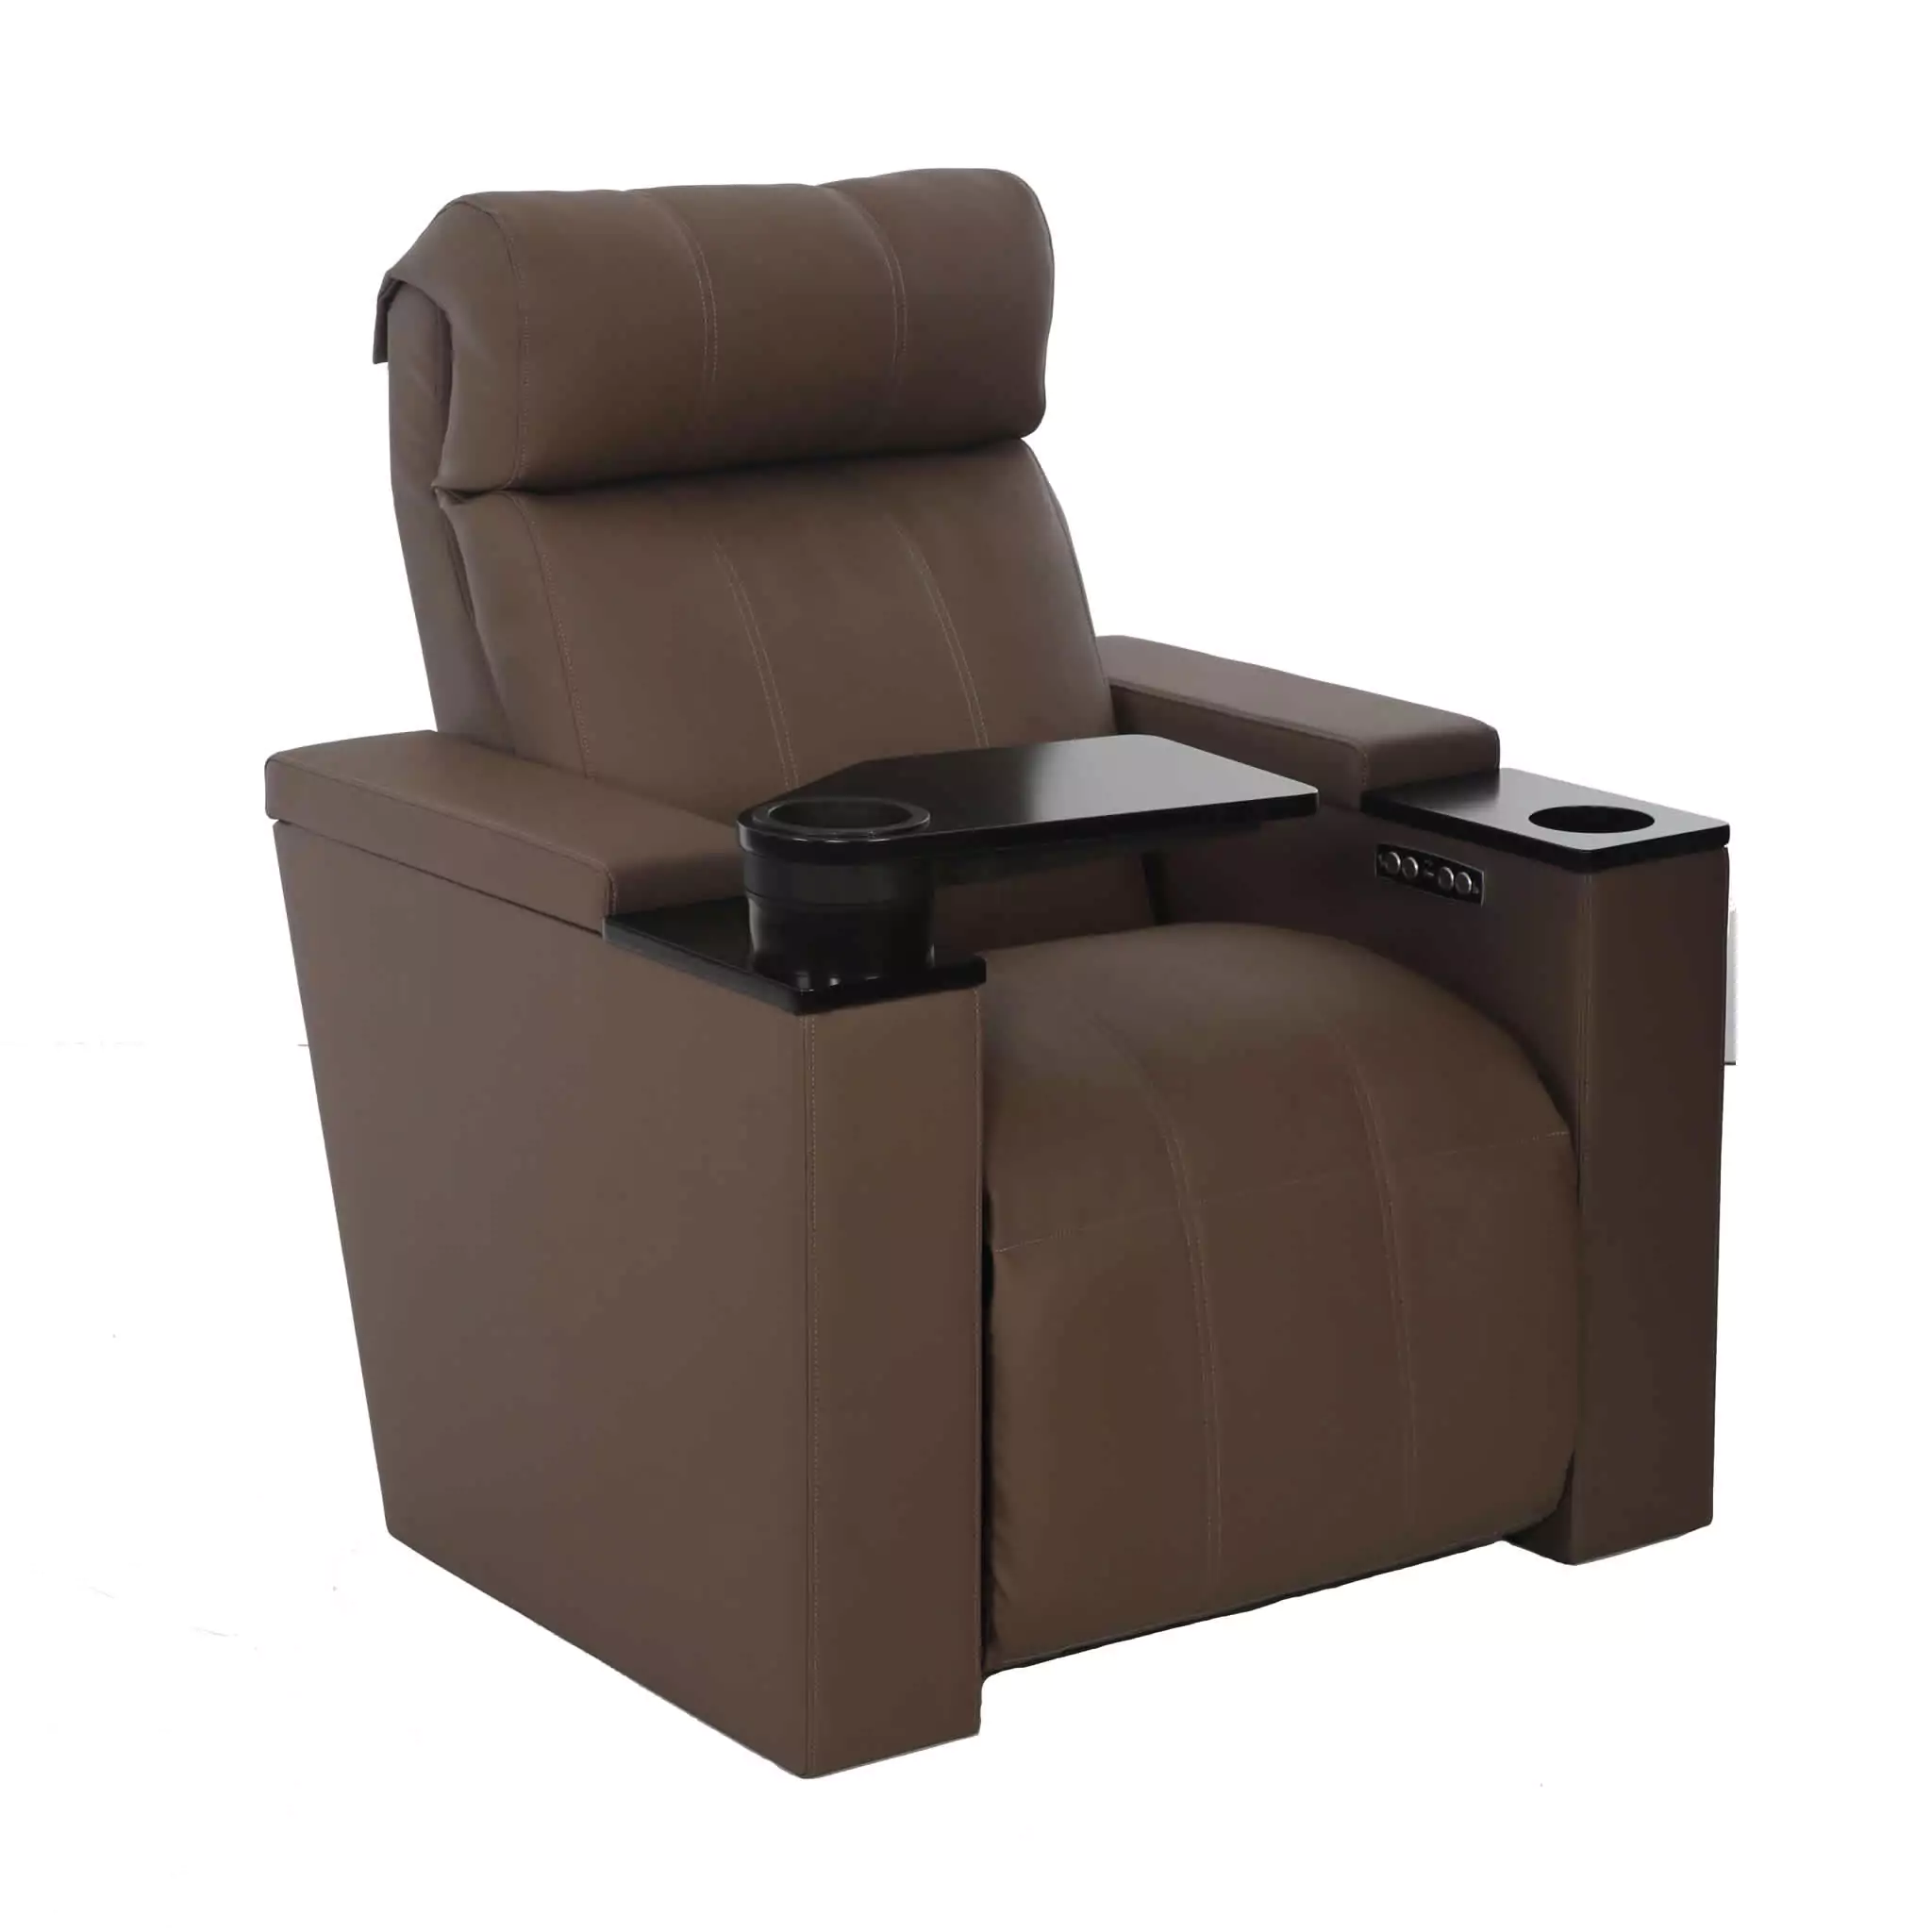 Simko Seating Product Recliner Cinema Seat Monstone 02